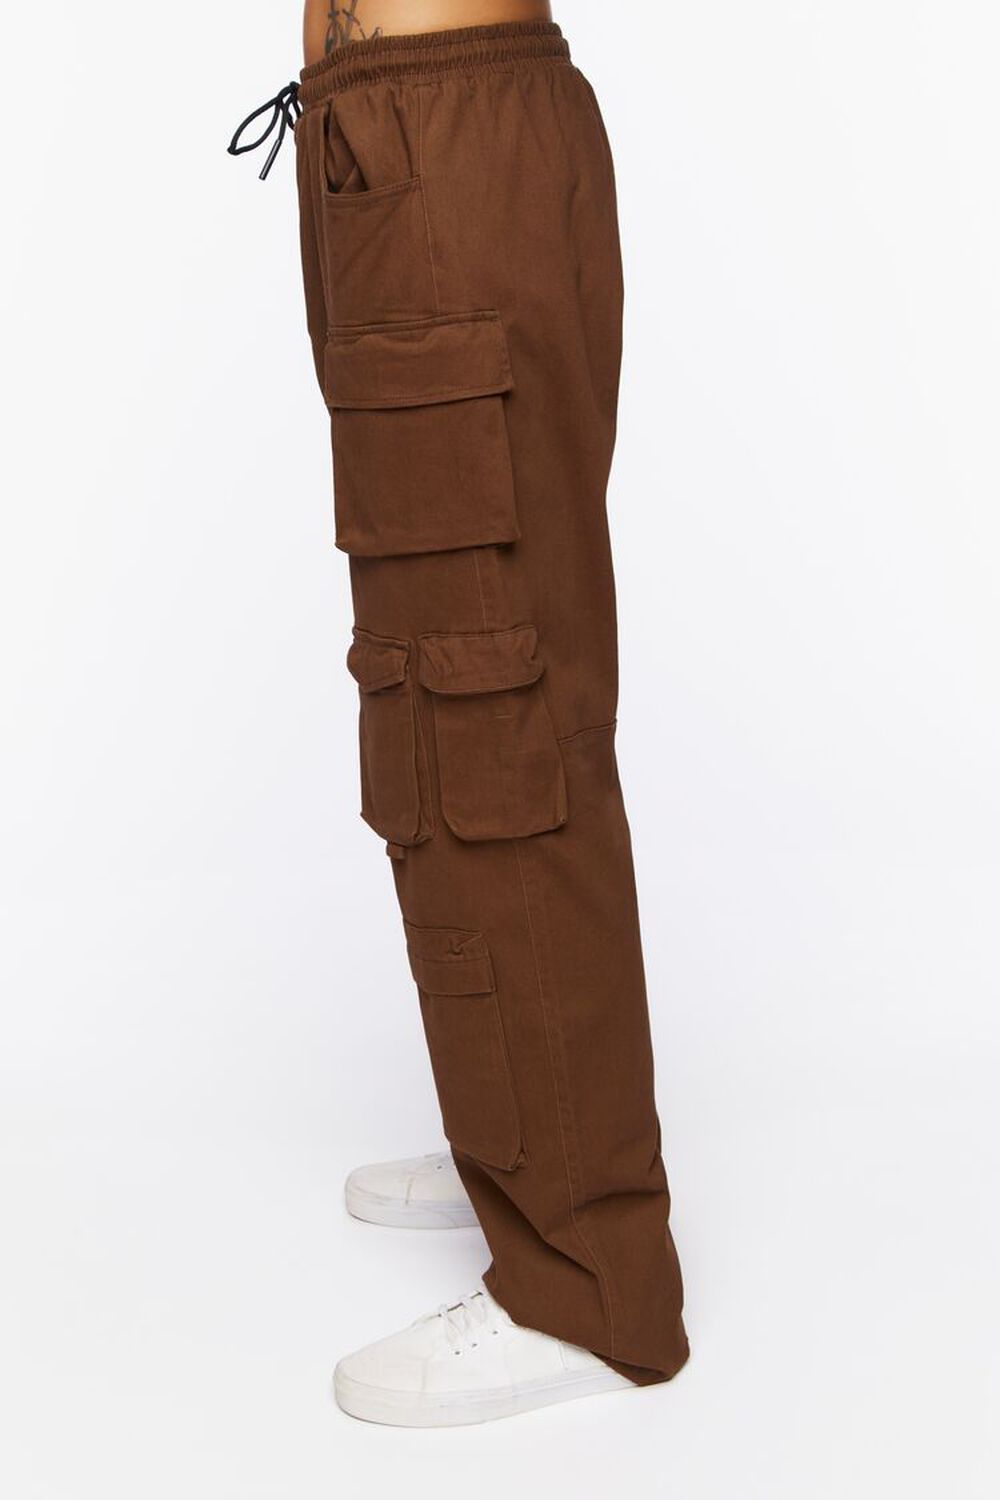 BROWN Straight-Leg Cargo Pants, image 3